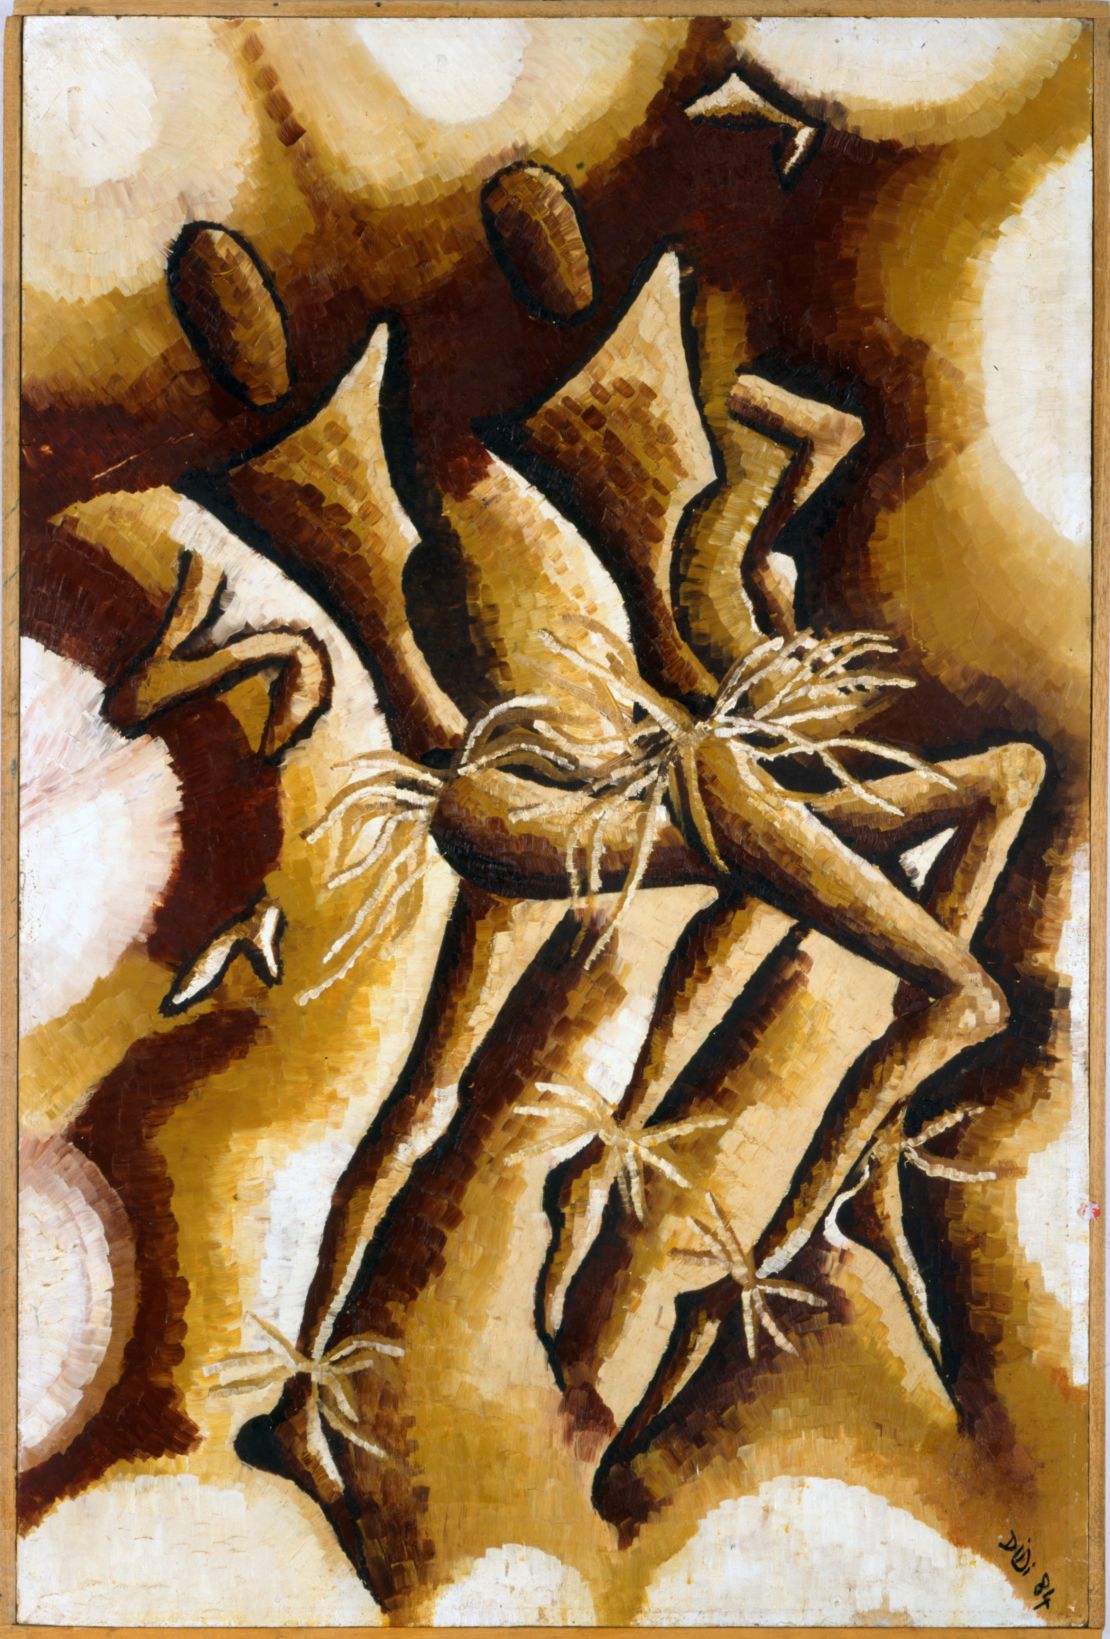 Detail of "The Dance" (1984) by Ndidi Dike